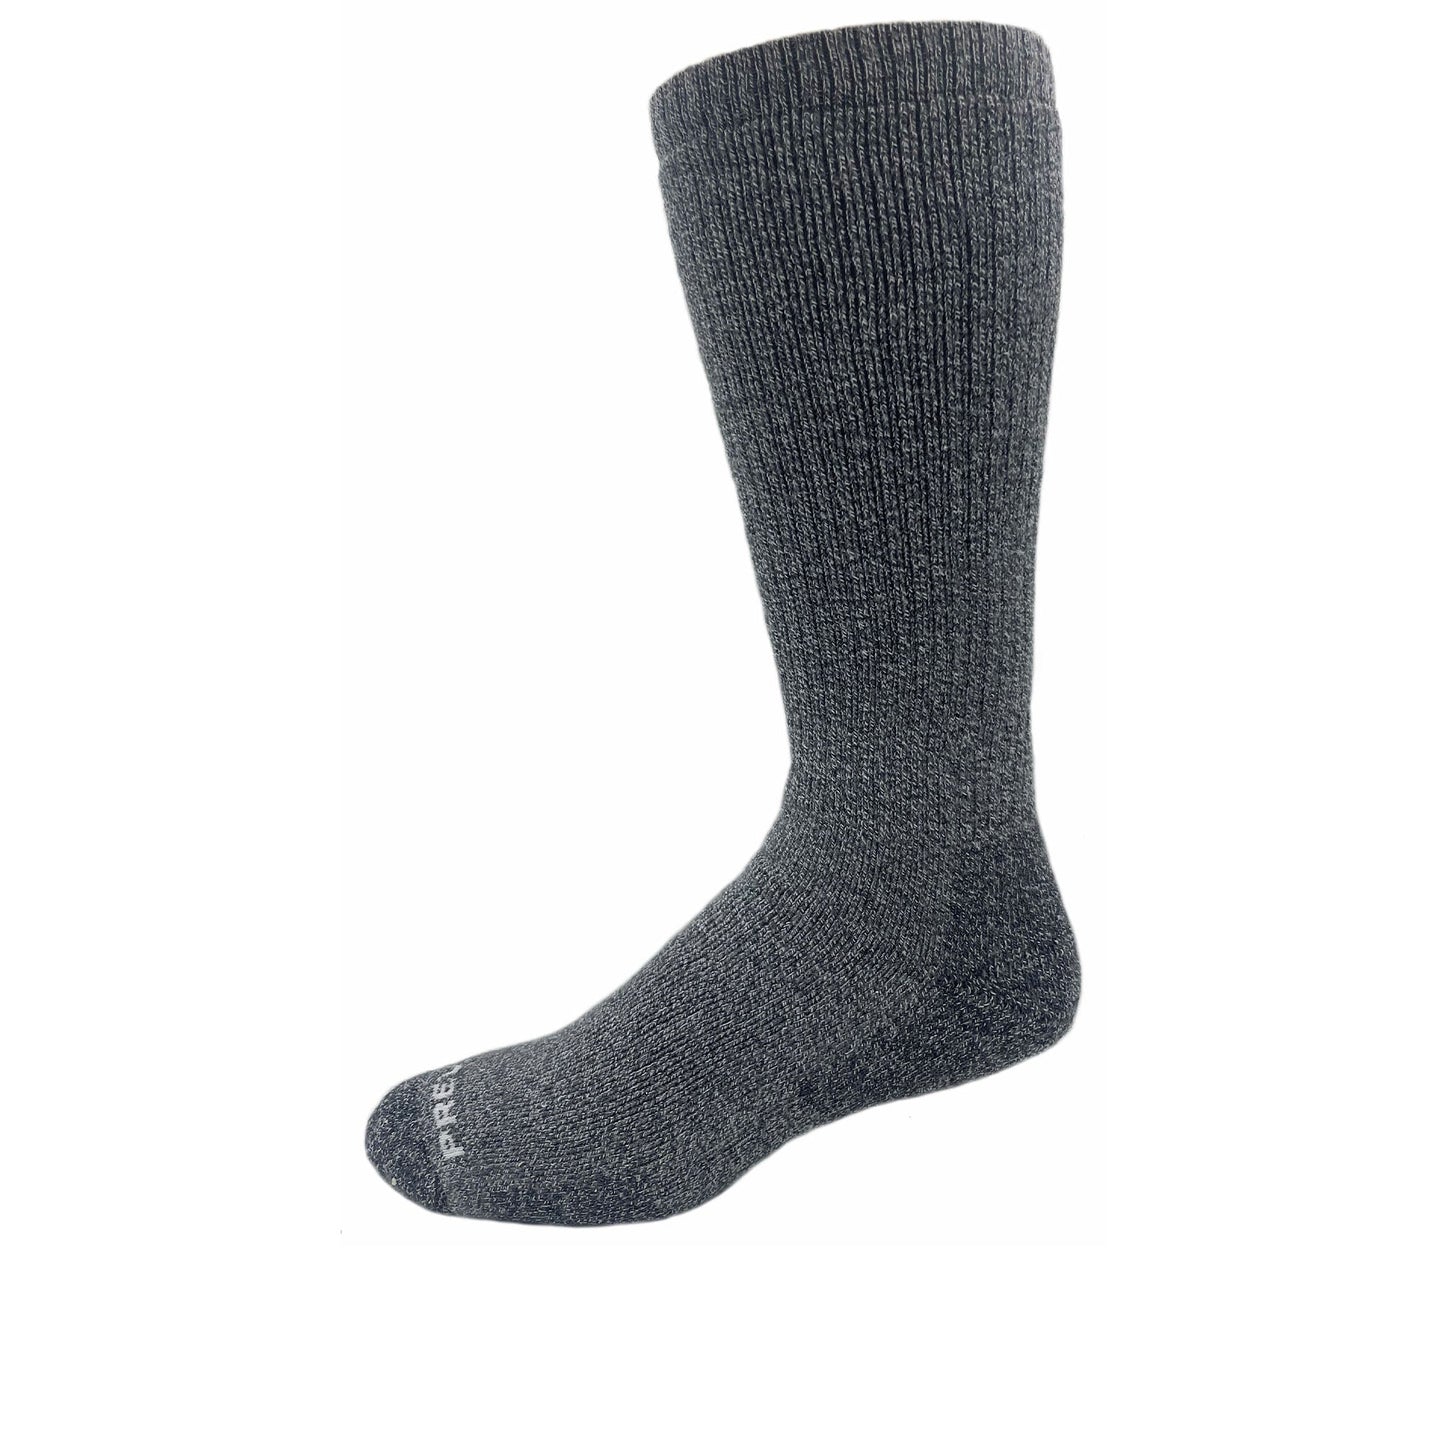 Altera - Prevail Medium Weight 12" OTC Sock